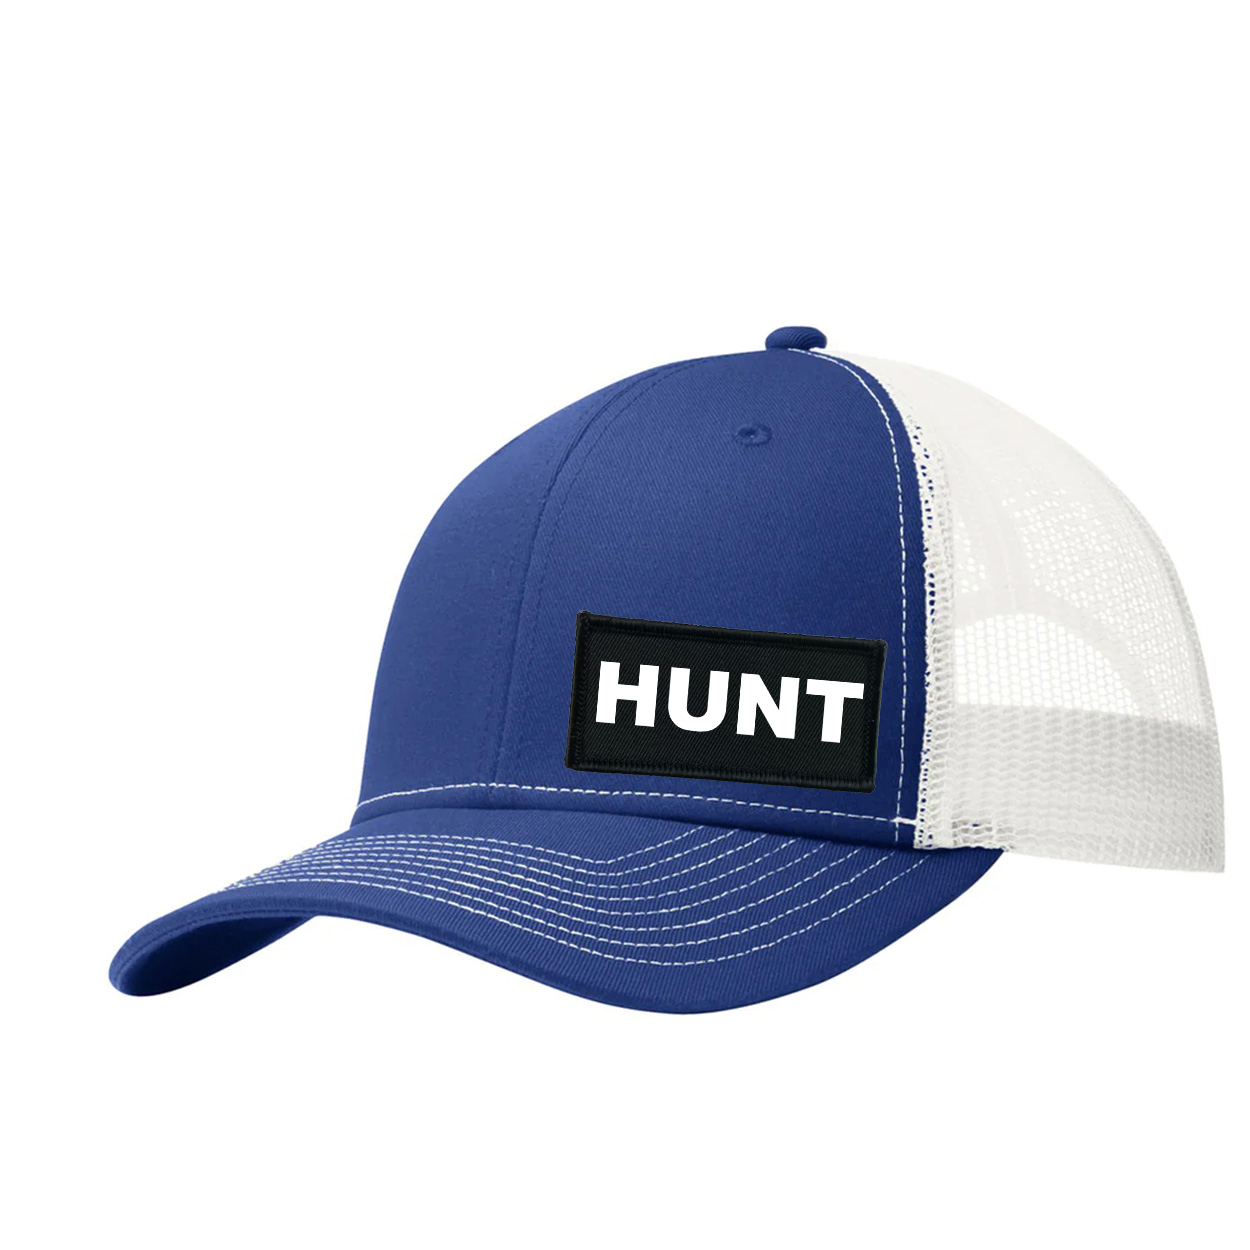 Hunt Brand Logo Night Out Woven Patch Snapback Trucker Hat Dark Royal/White (White Logo)